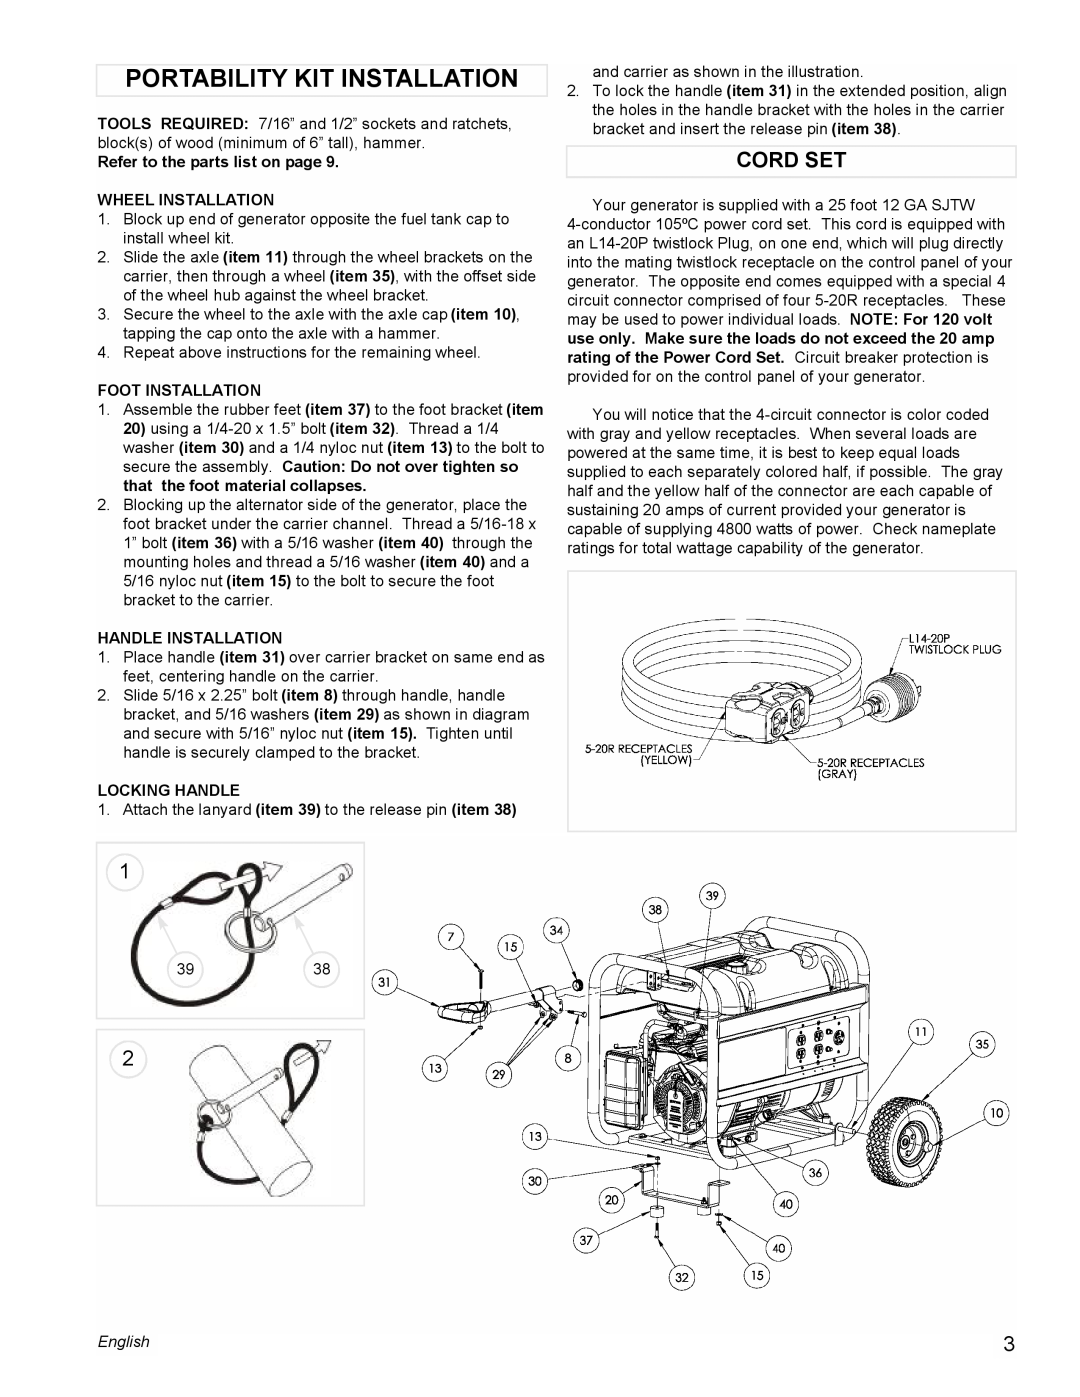 Coleman PM0435005 manual Portability Kit Installation, Cord Set, English 